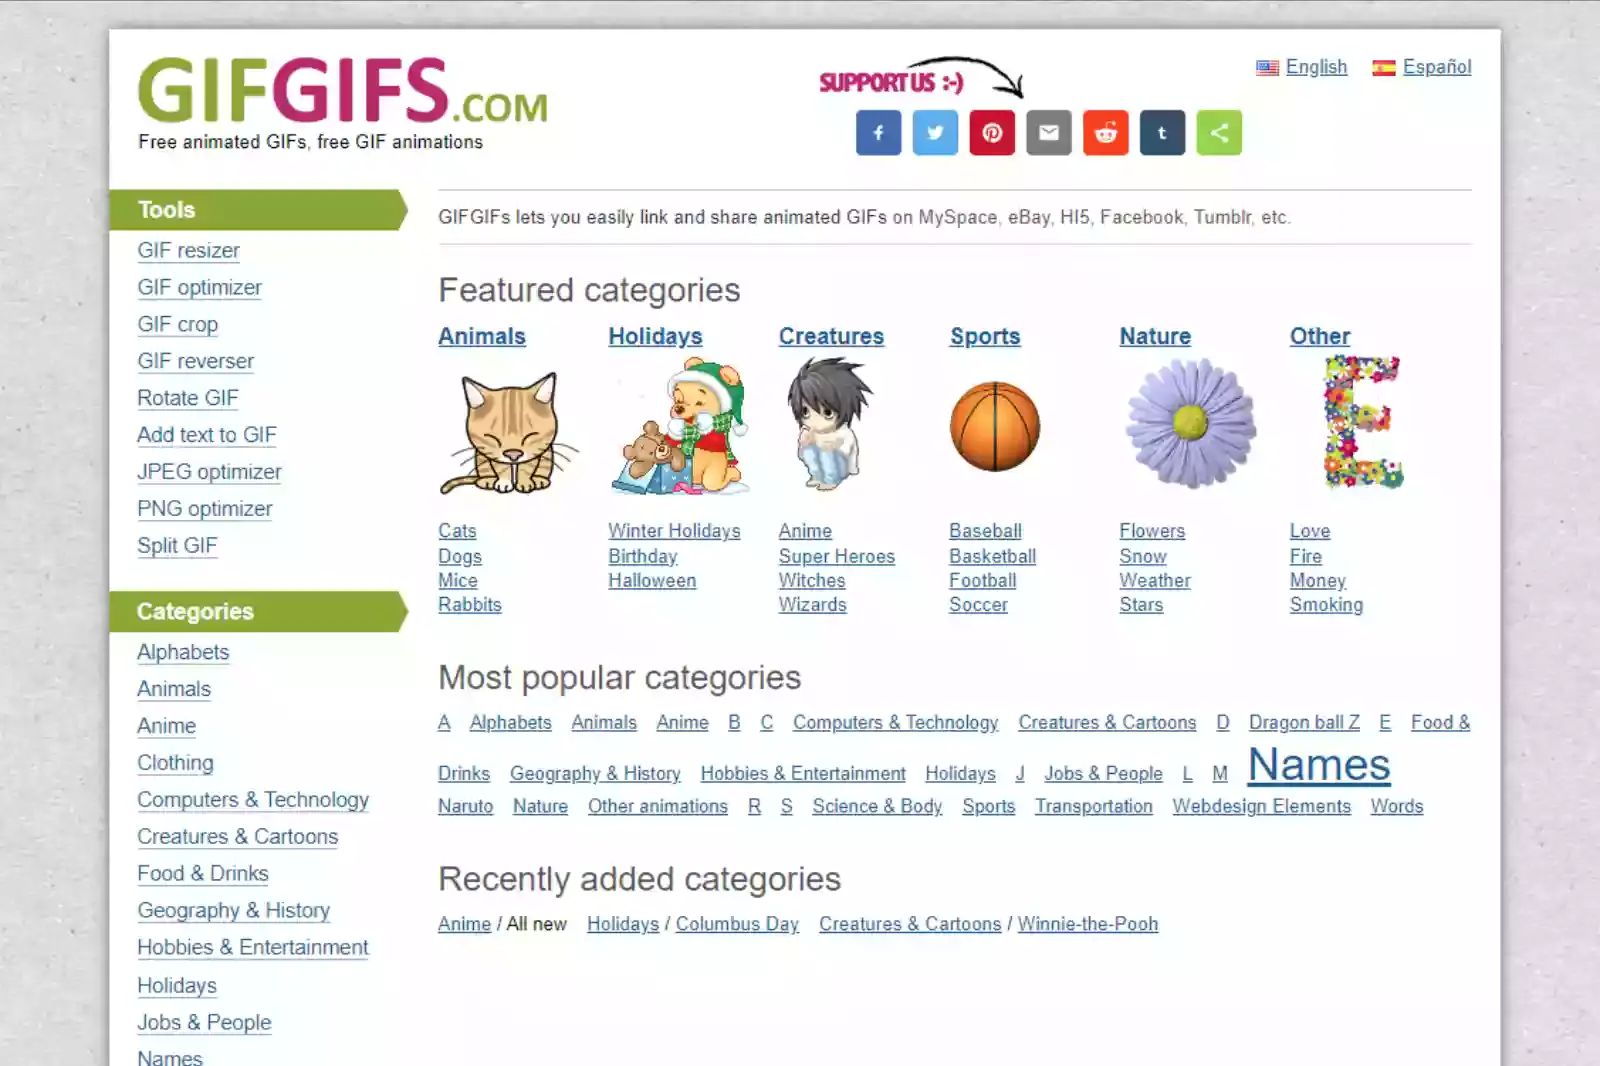 Home Gage of IFGIFS.com: